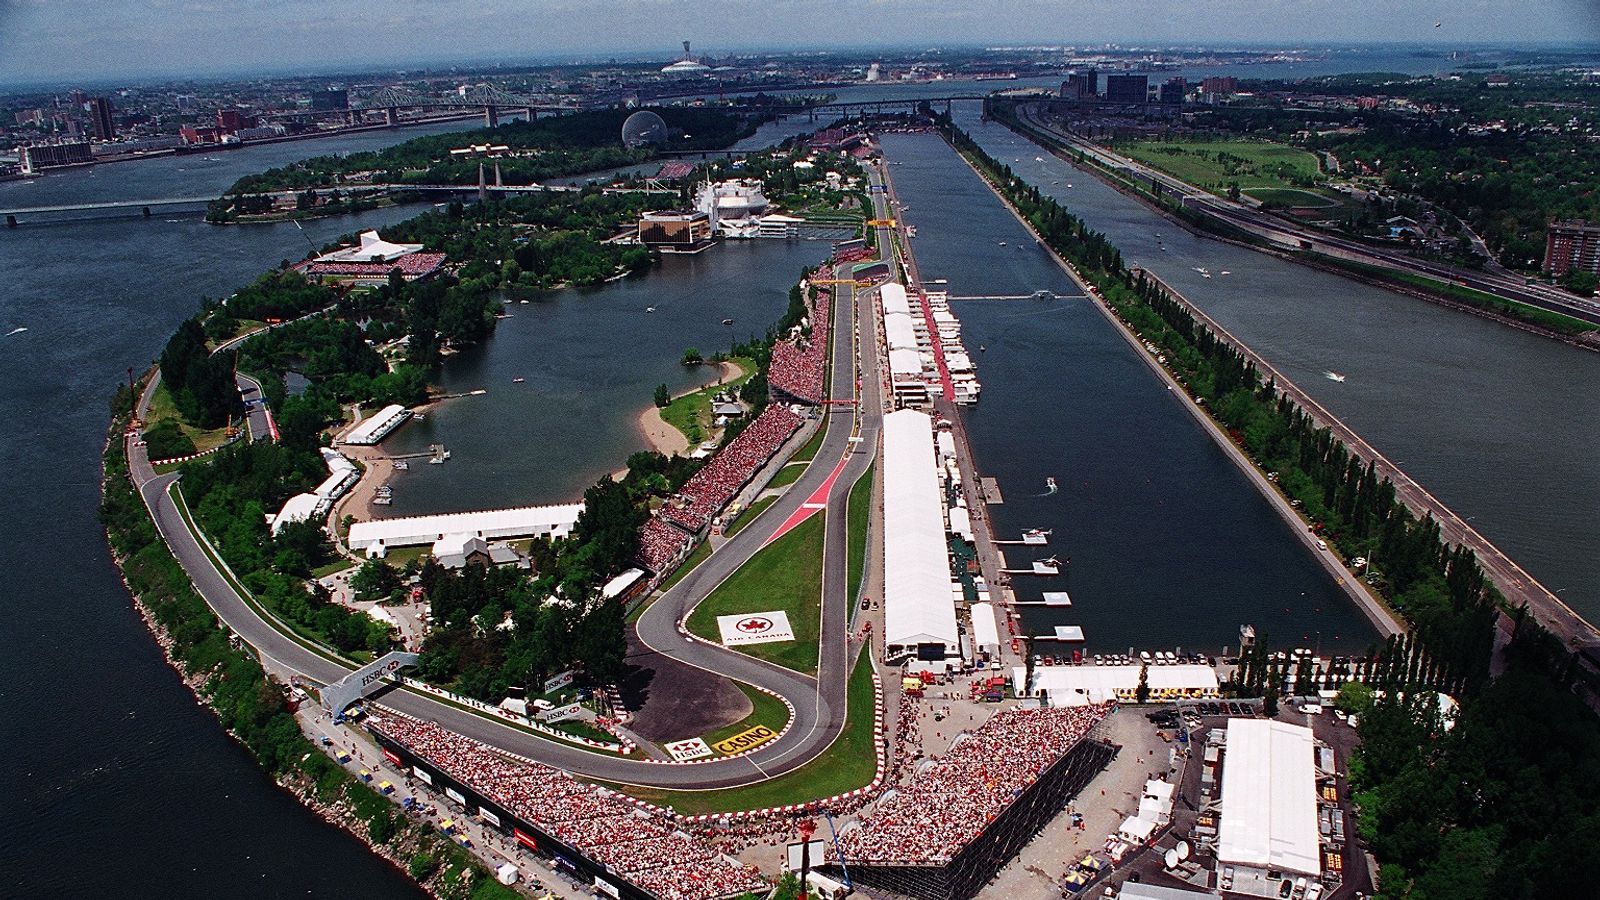 Circuit Gilles Villeneuve in profile | F1 News